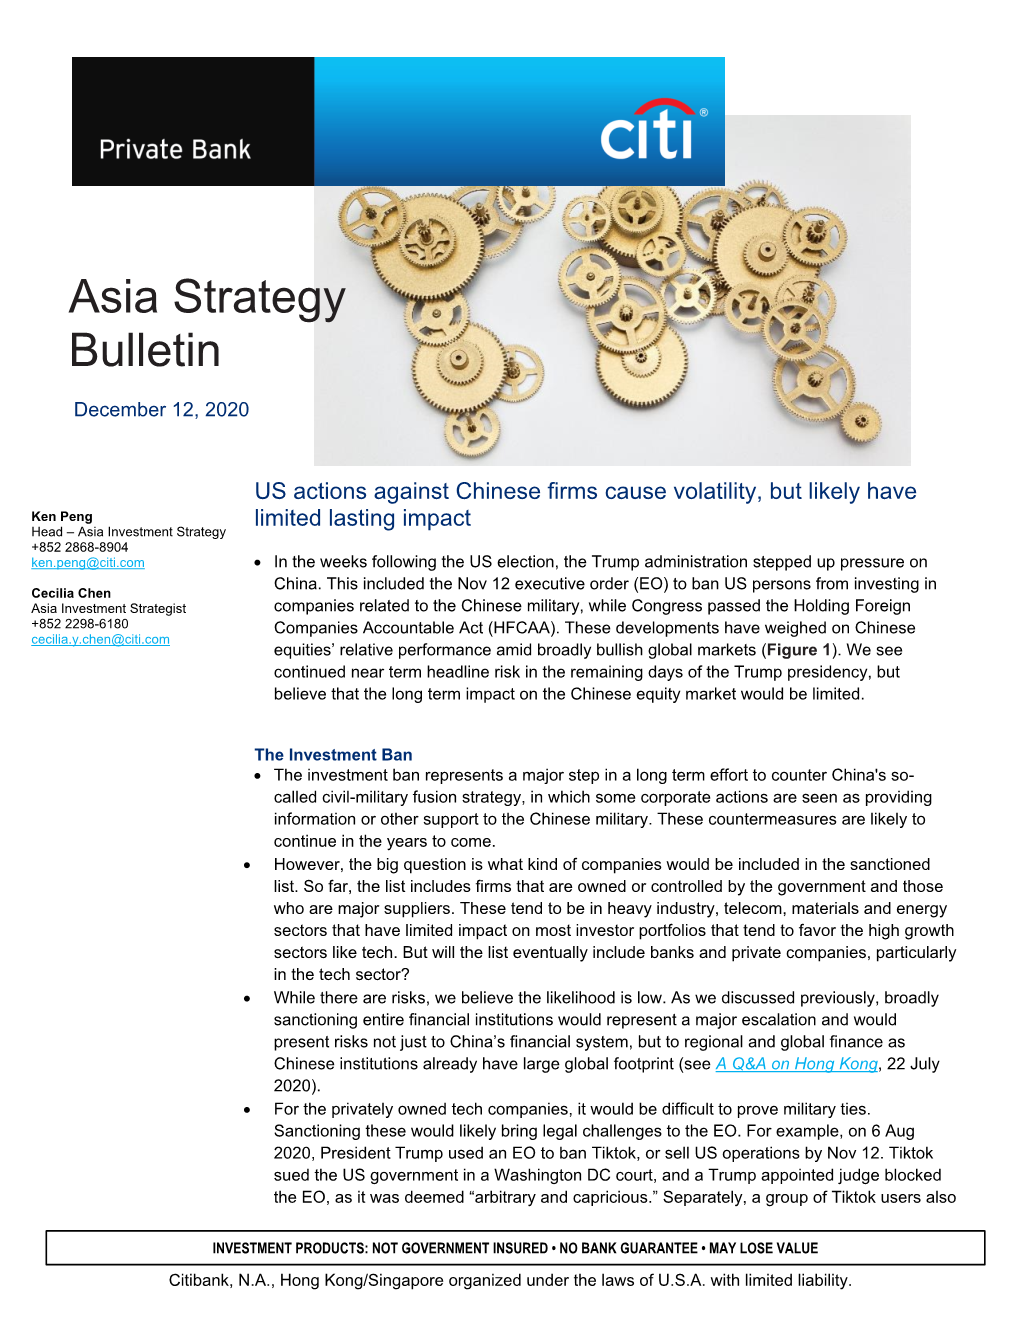 Asia Strategy Bulletin